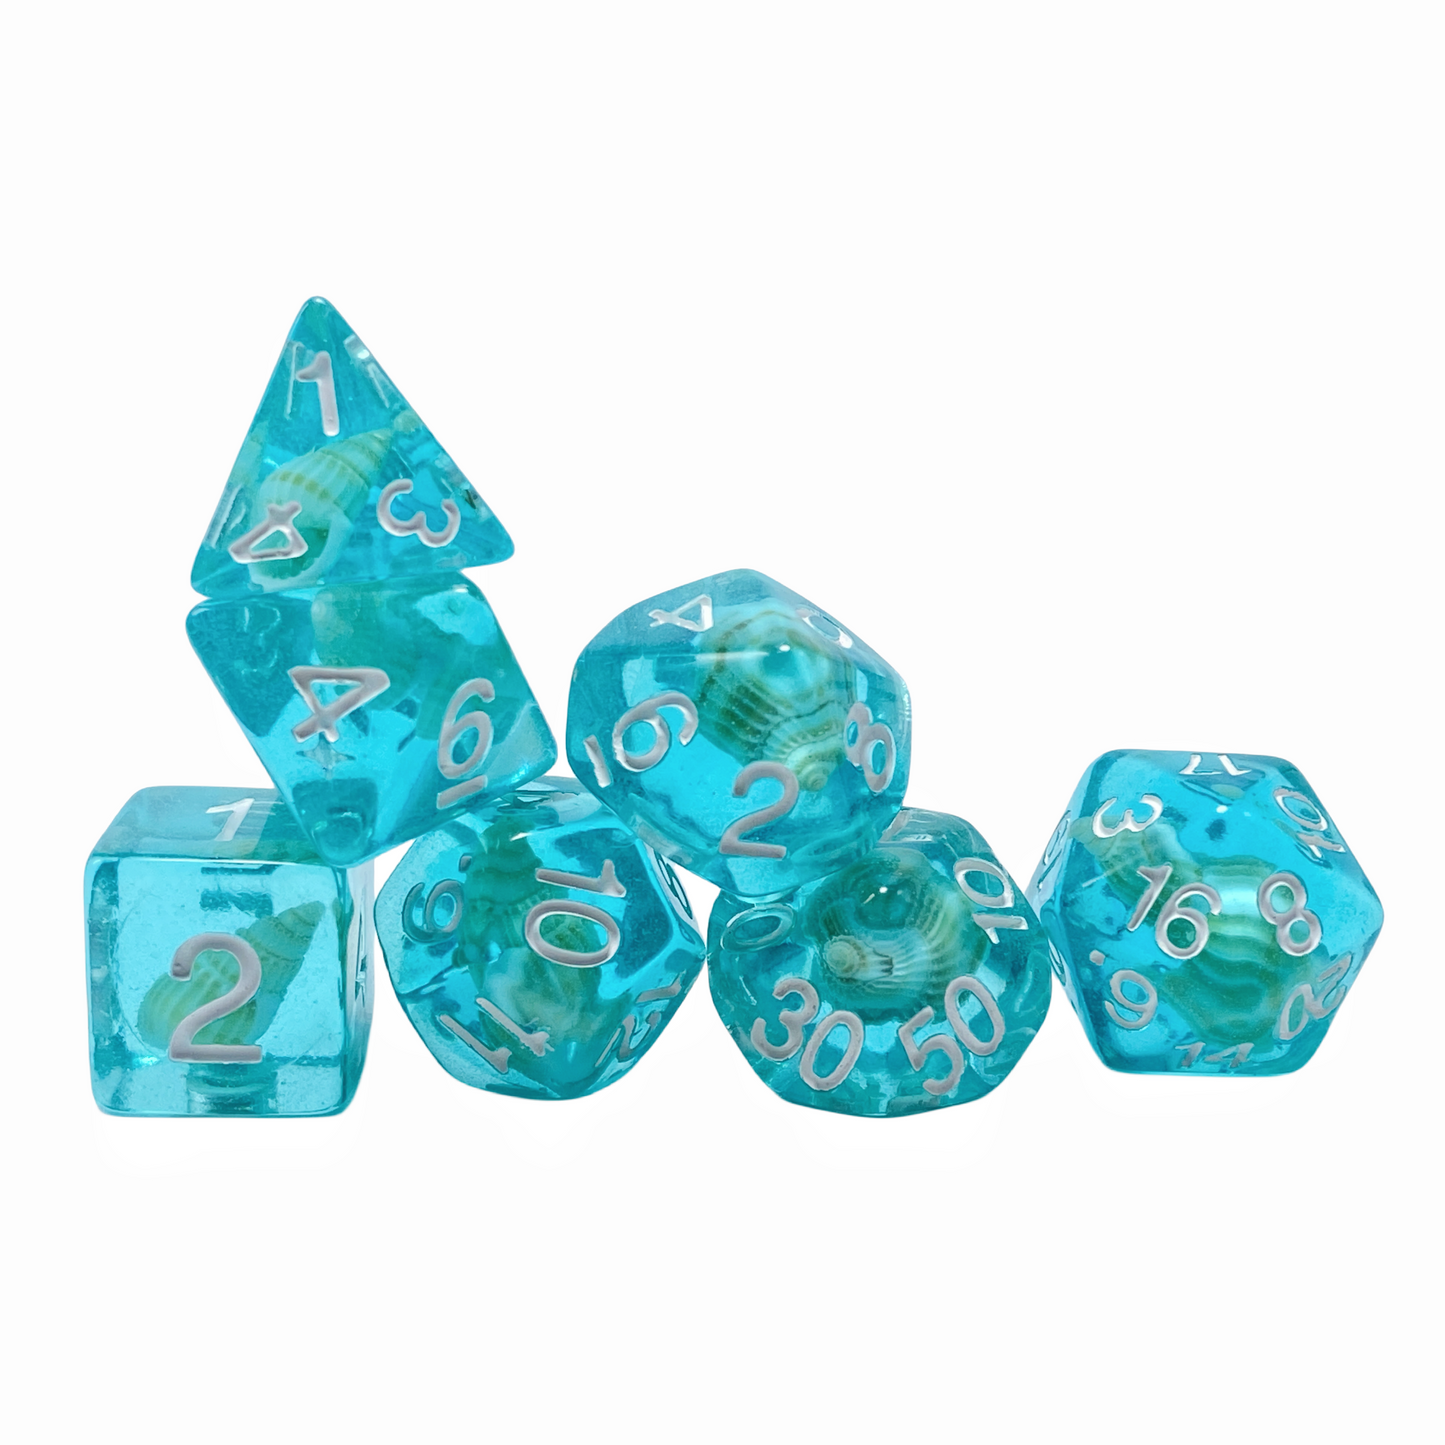 FREE Today: Blue Sea Snail Dice Set (Give away a random dice set)